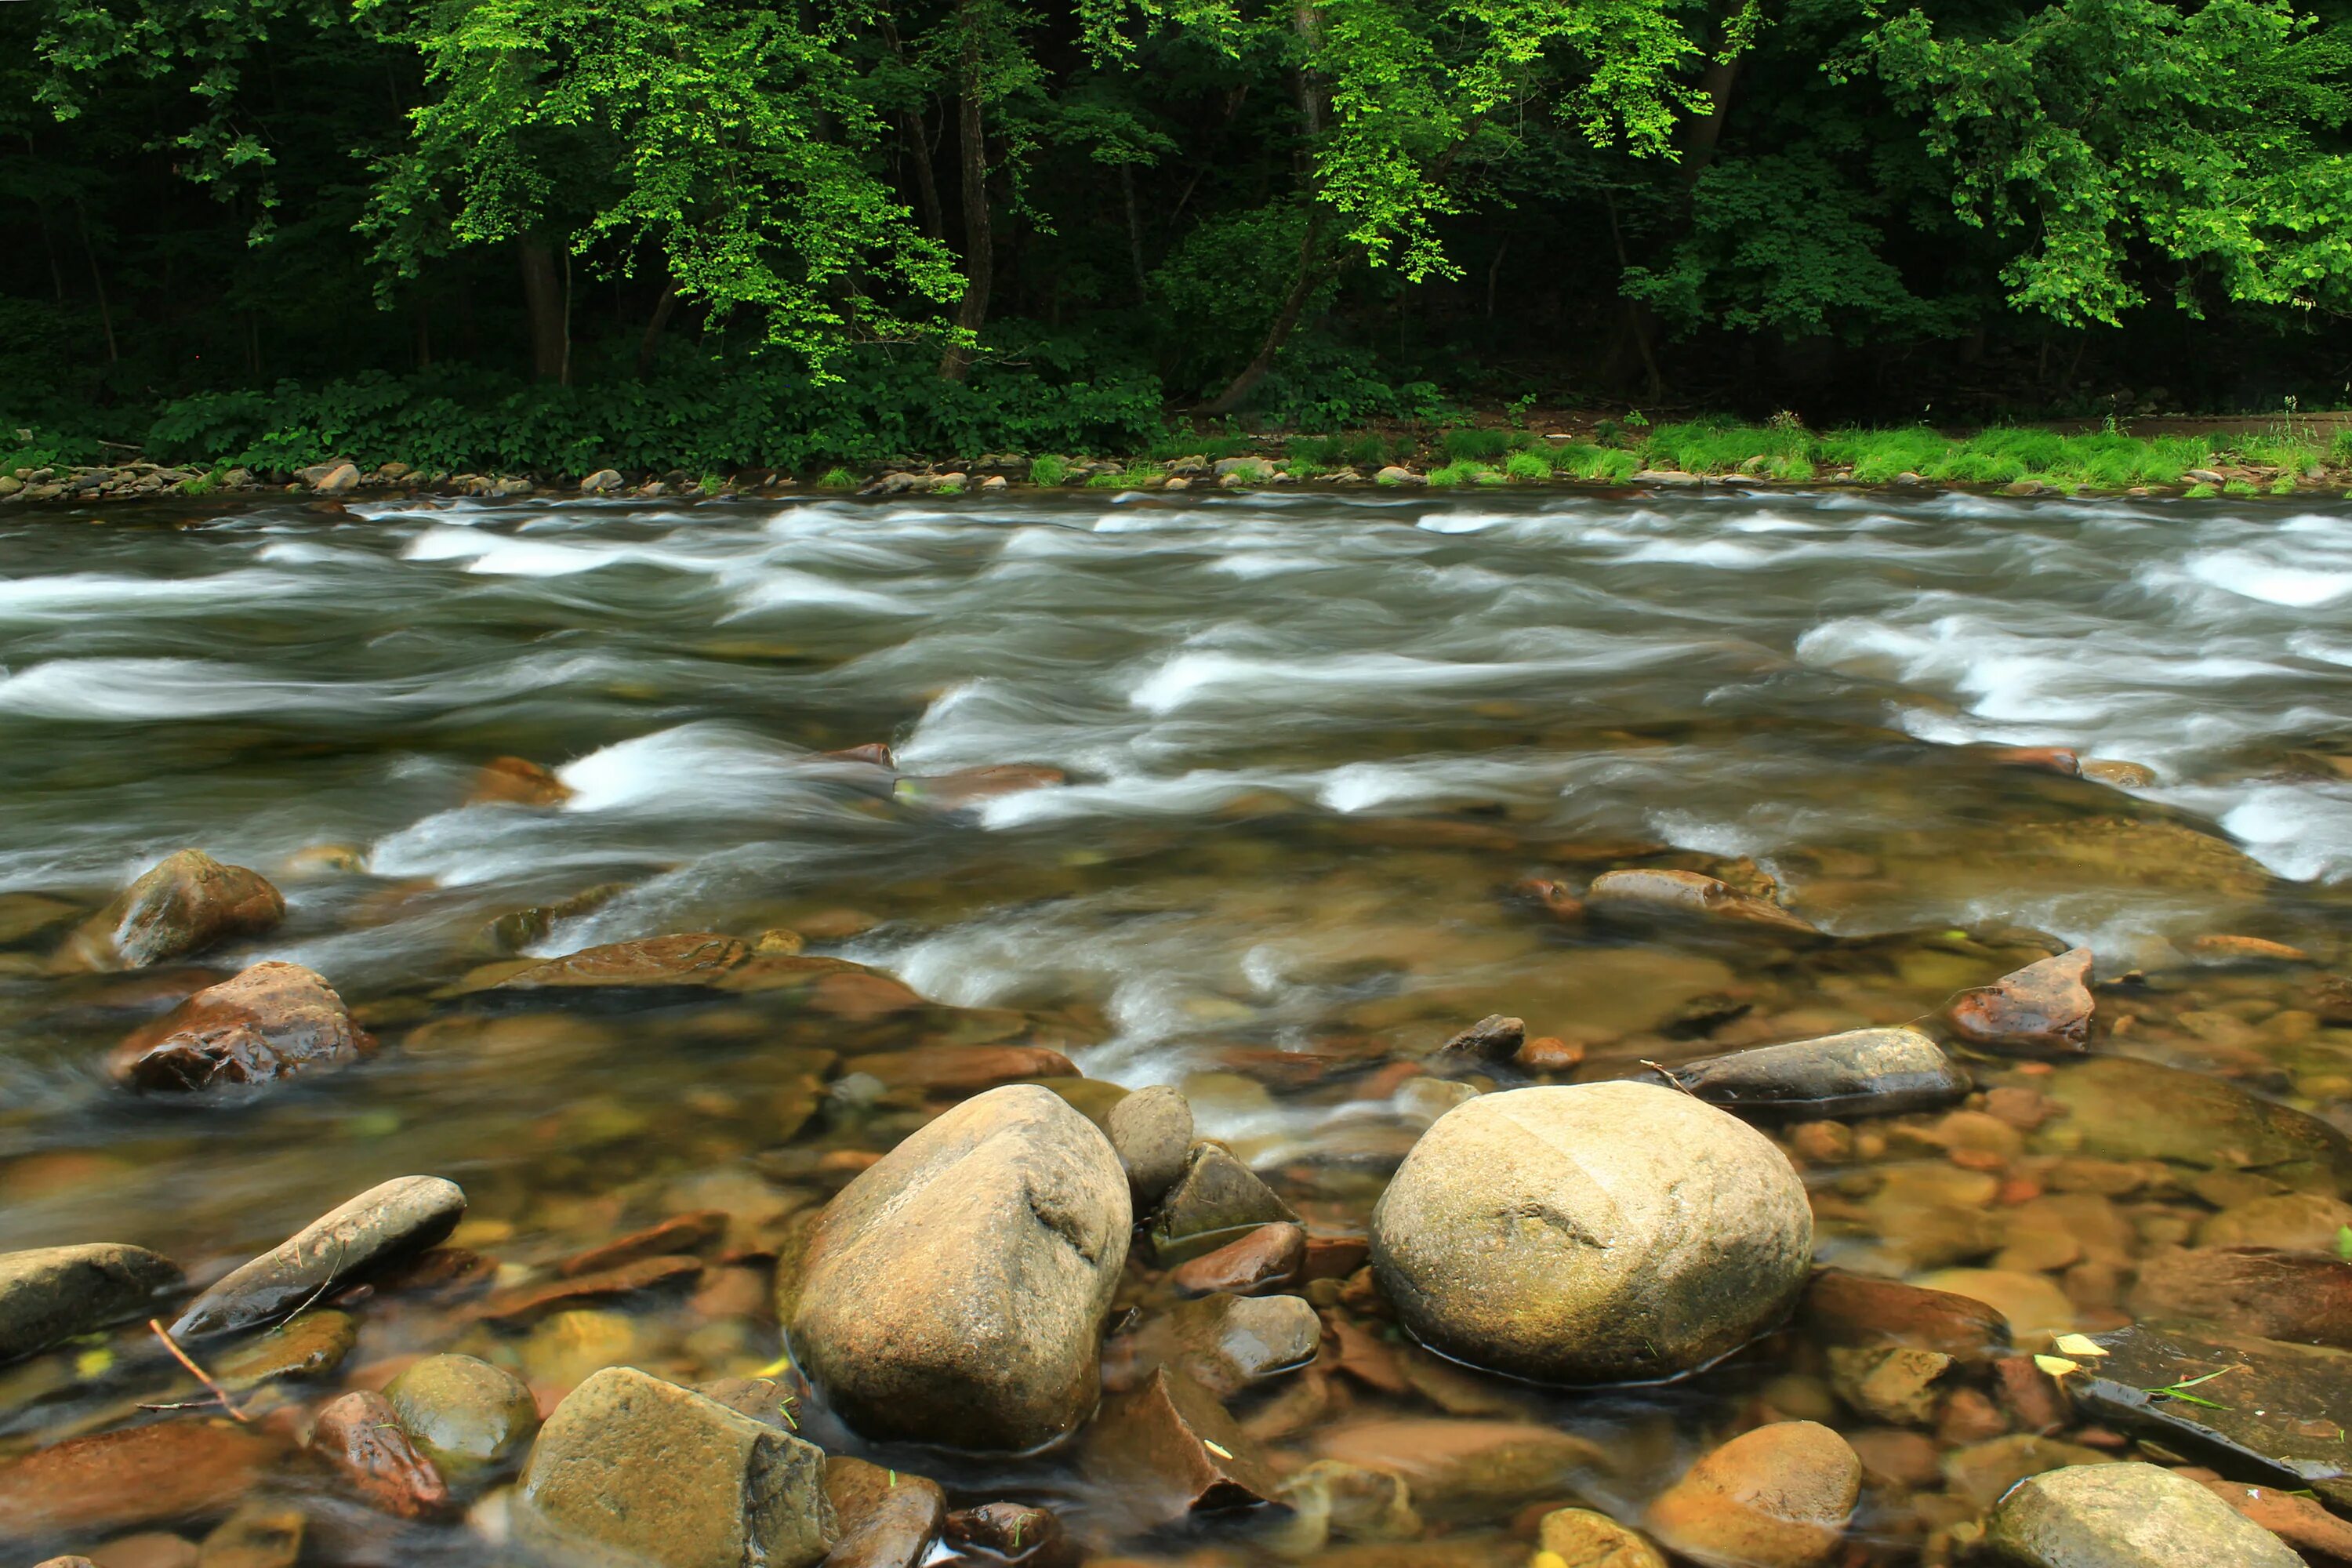 Stone river. Камни валуны берег река ручей. Чангинола река камни. Речка камни. Камни в реке.